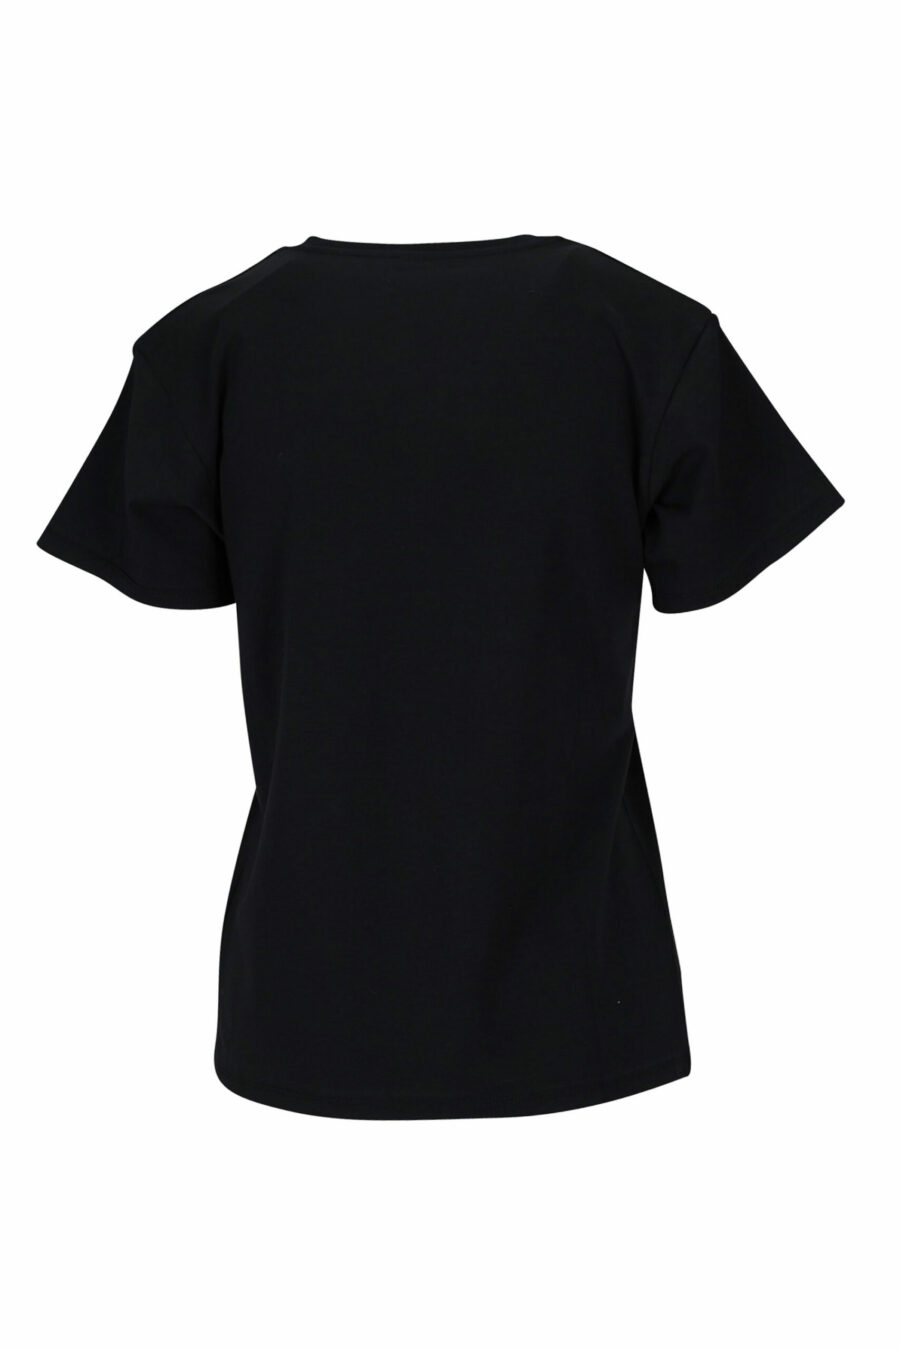 Schwarzes T-Shirt mit V-Ausschnitt und monochromem Bandlogo - 889316614954 1 skaliert